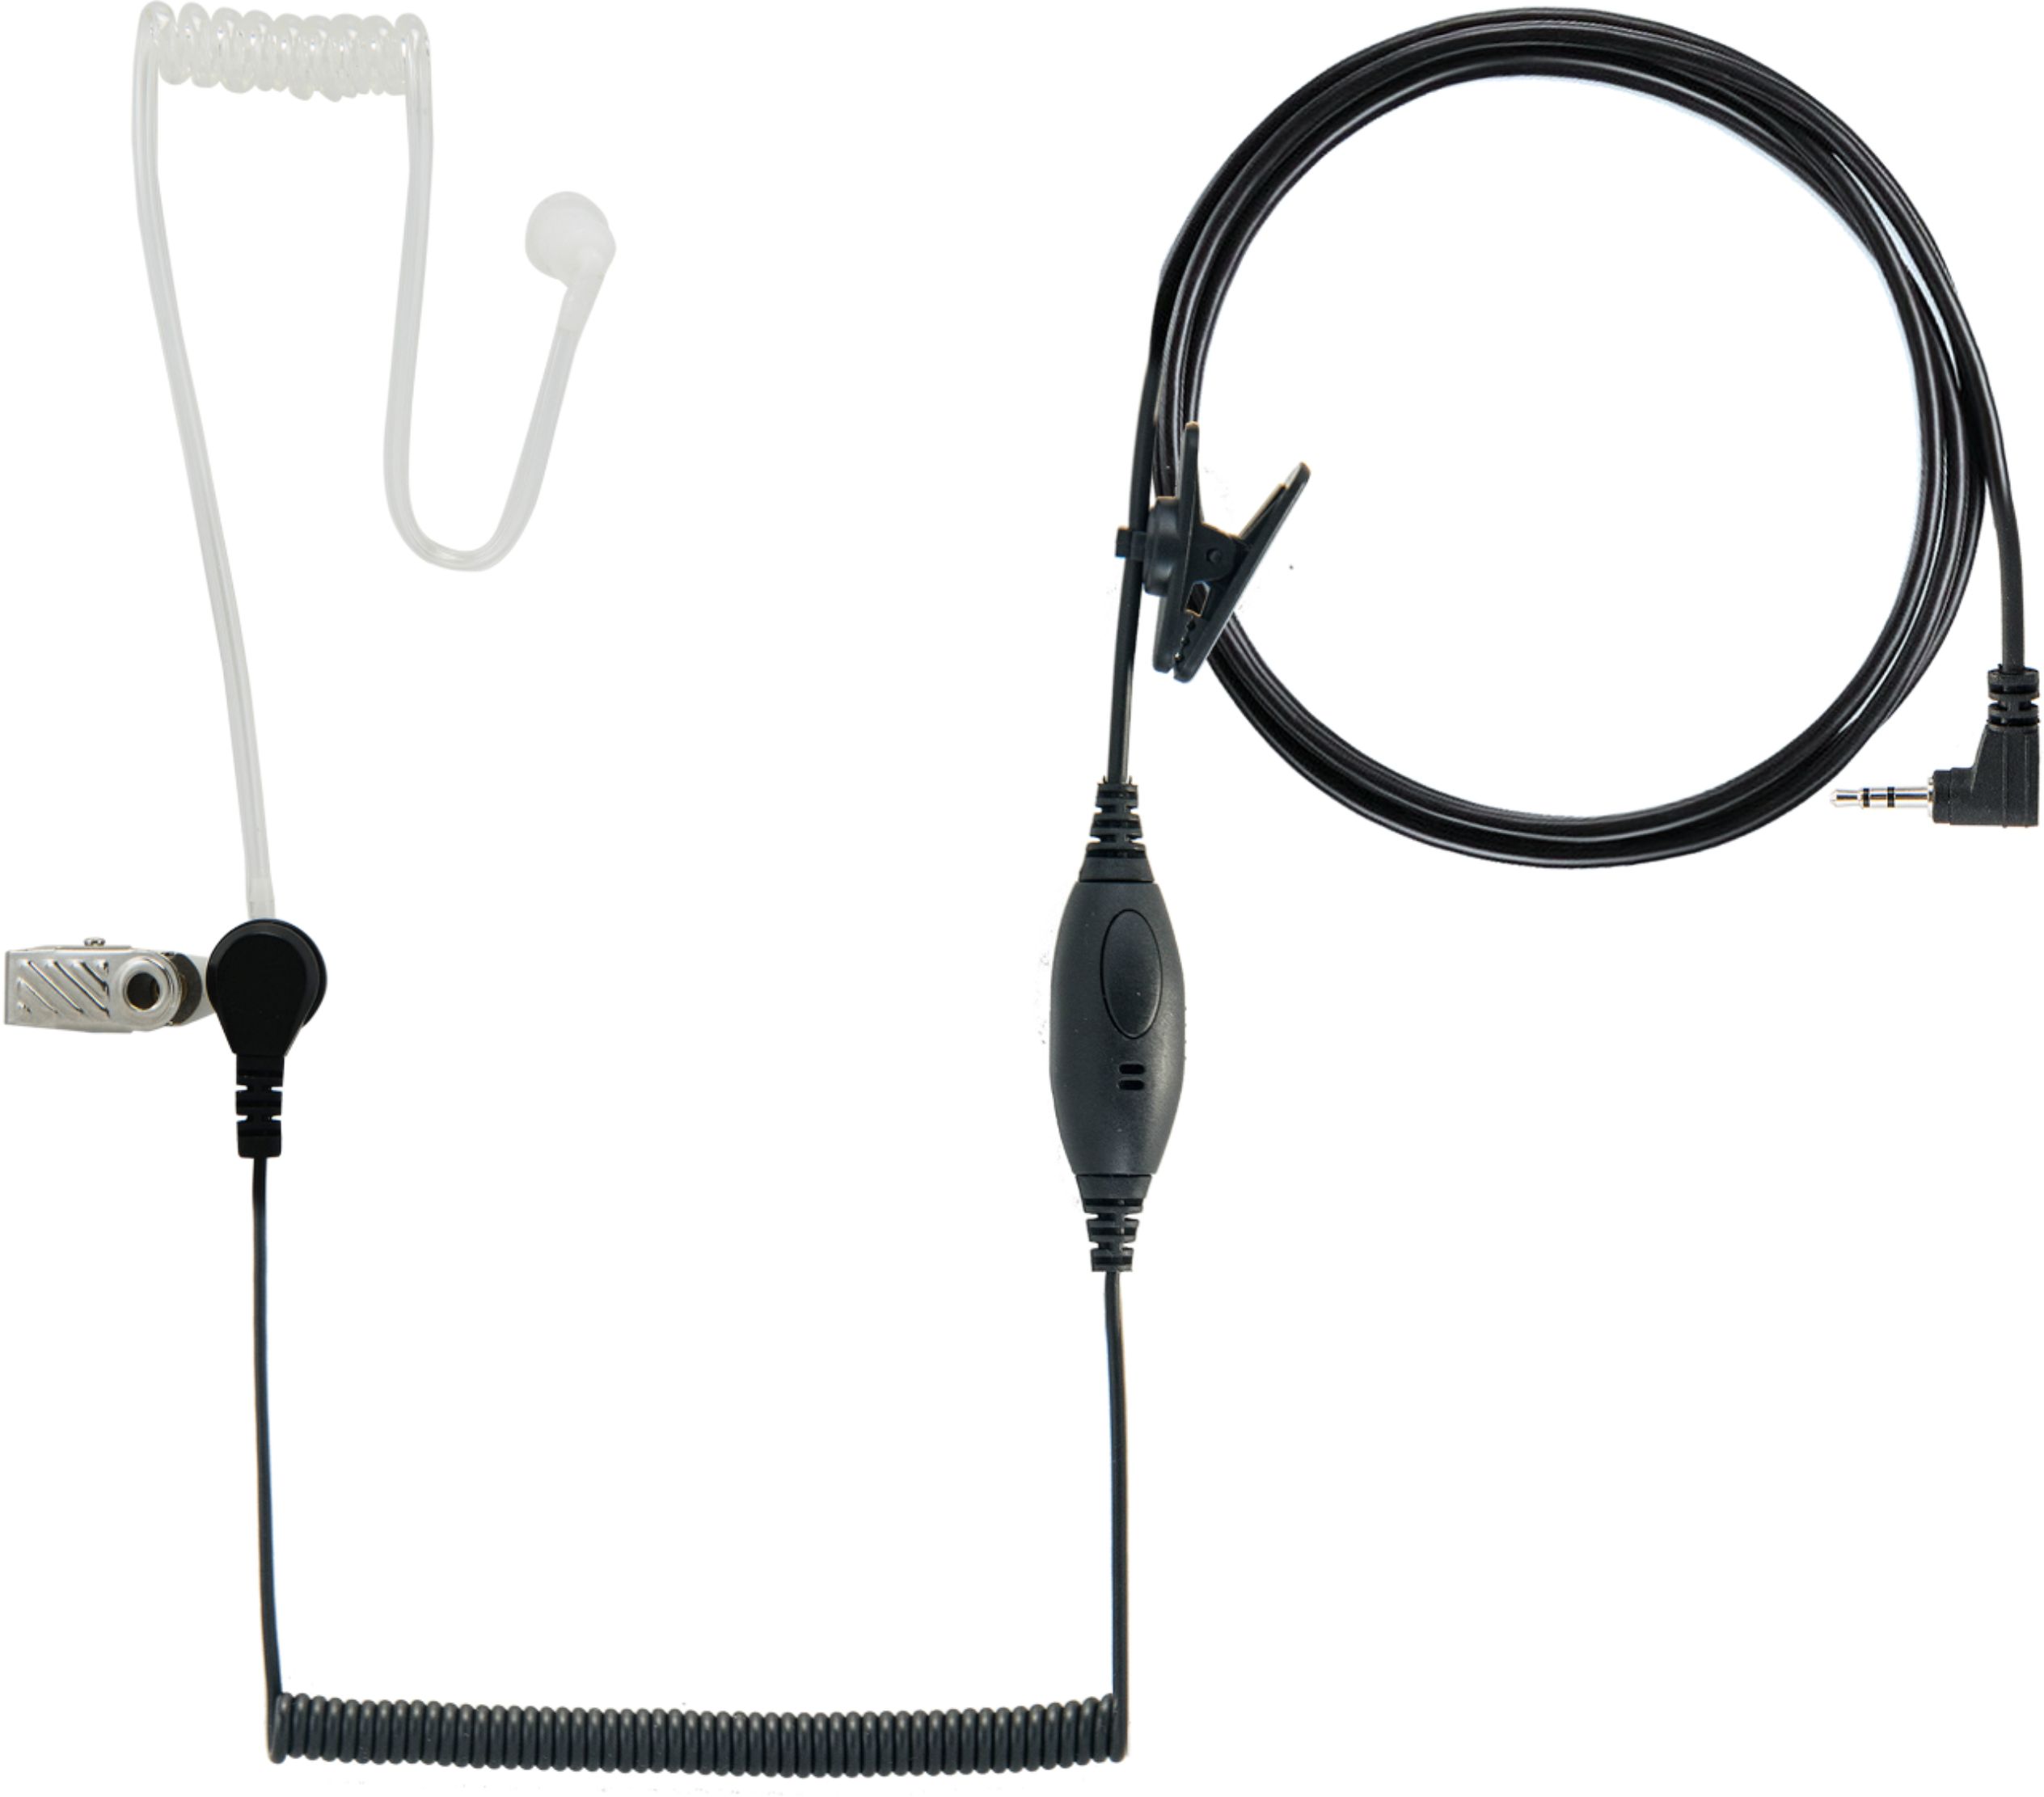 Angle View: Midland - BizTalk™ Over-The-Ear Headset - Black